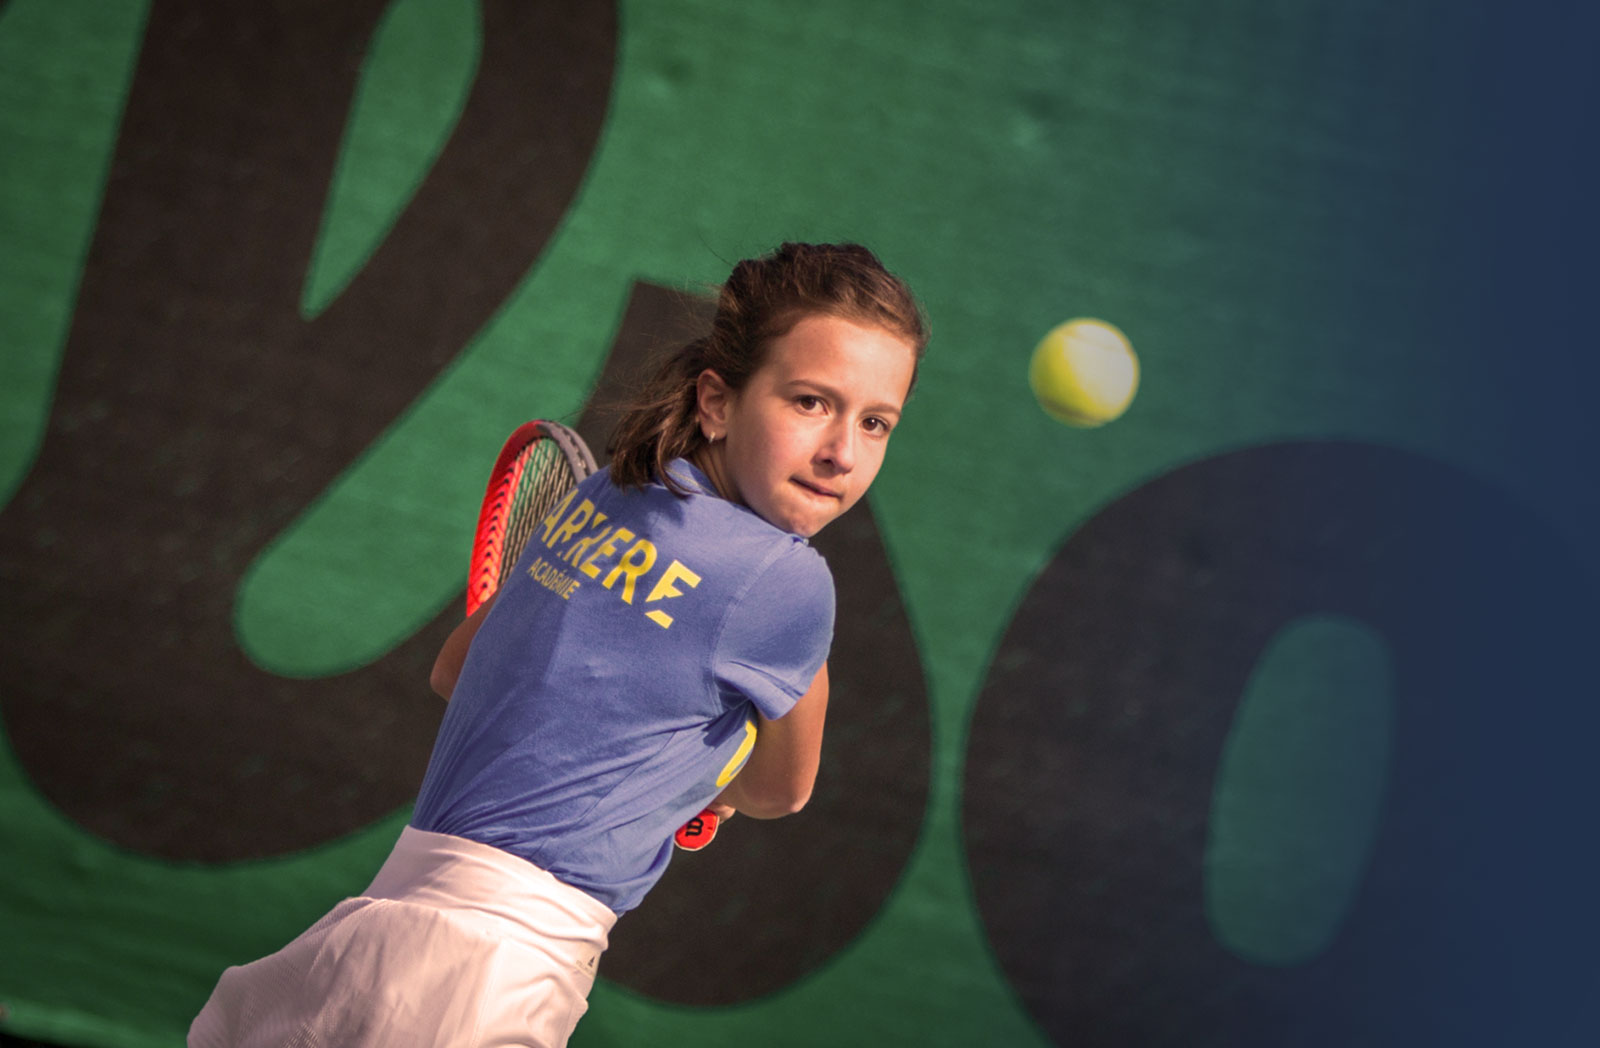 Competition tennis et coaching tournoi - Academie tennis alain barrere